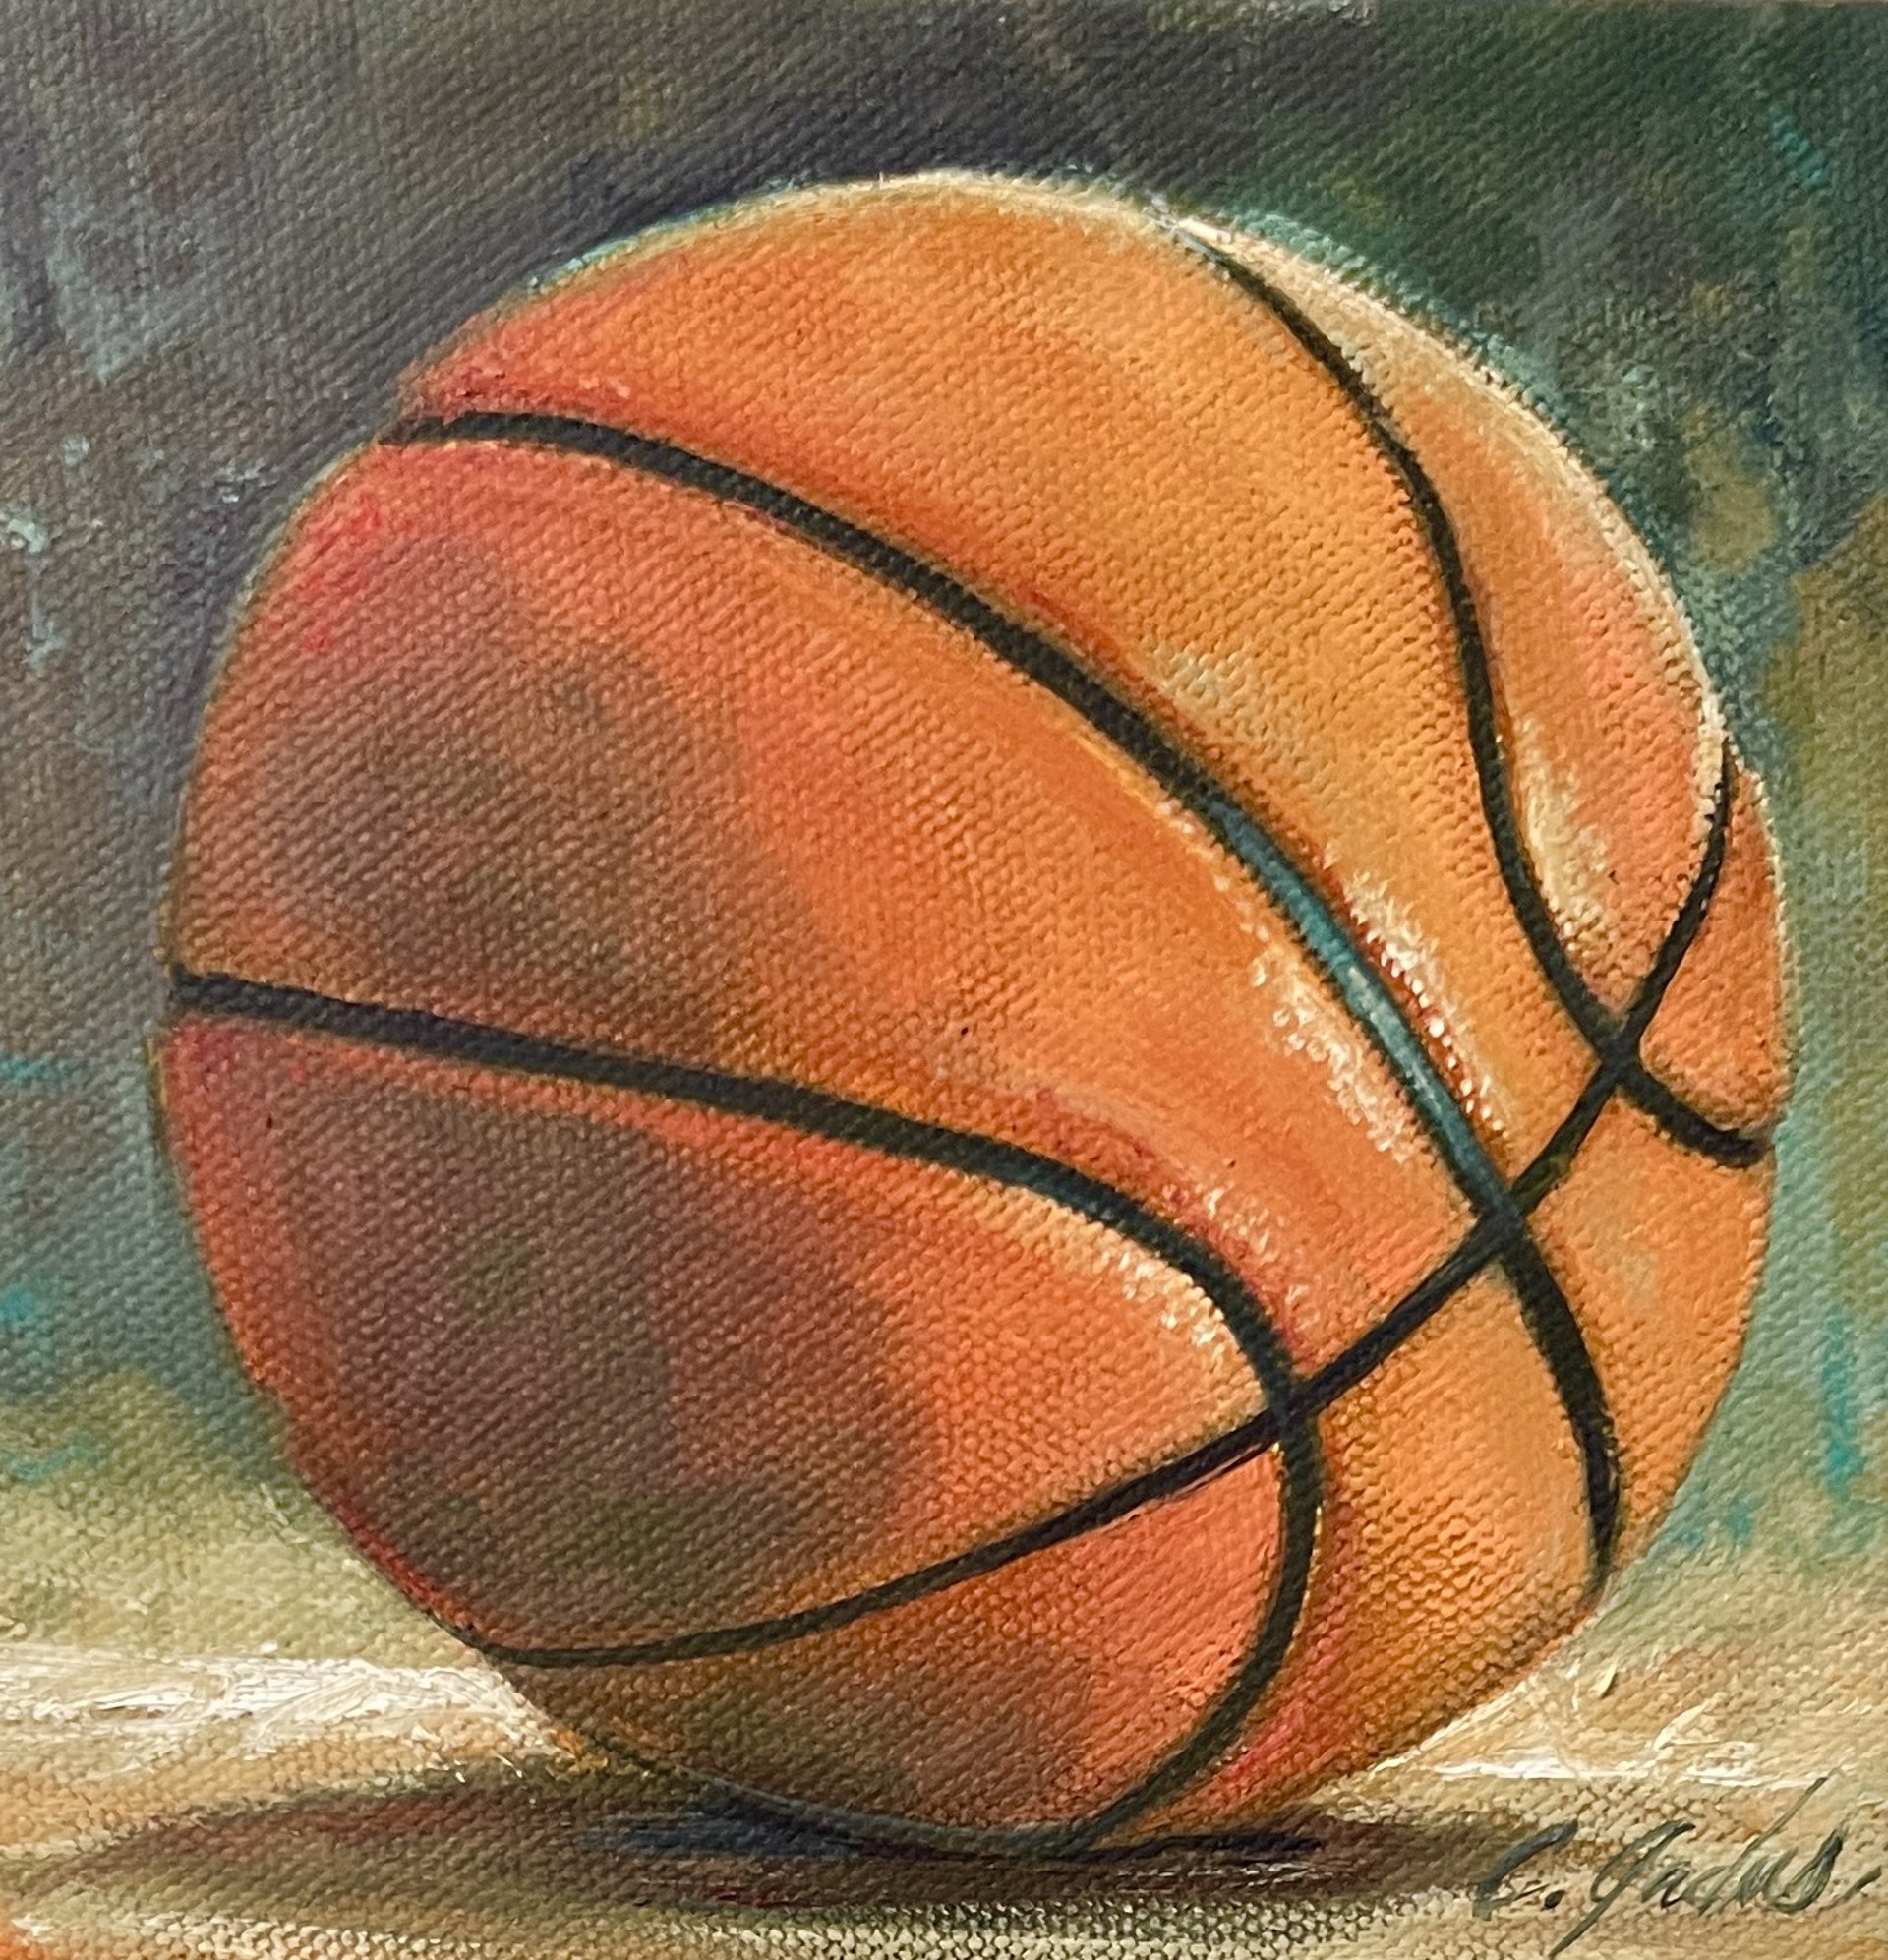 Basketball Study by Carrie Jadus